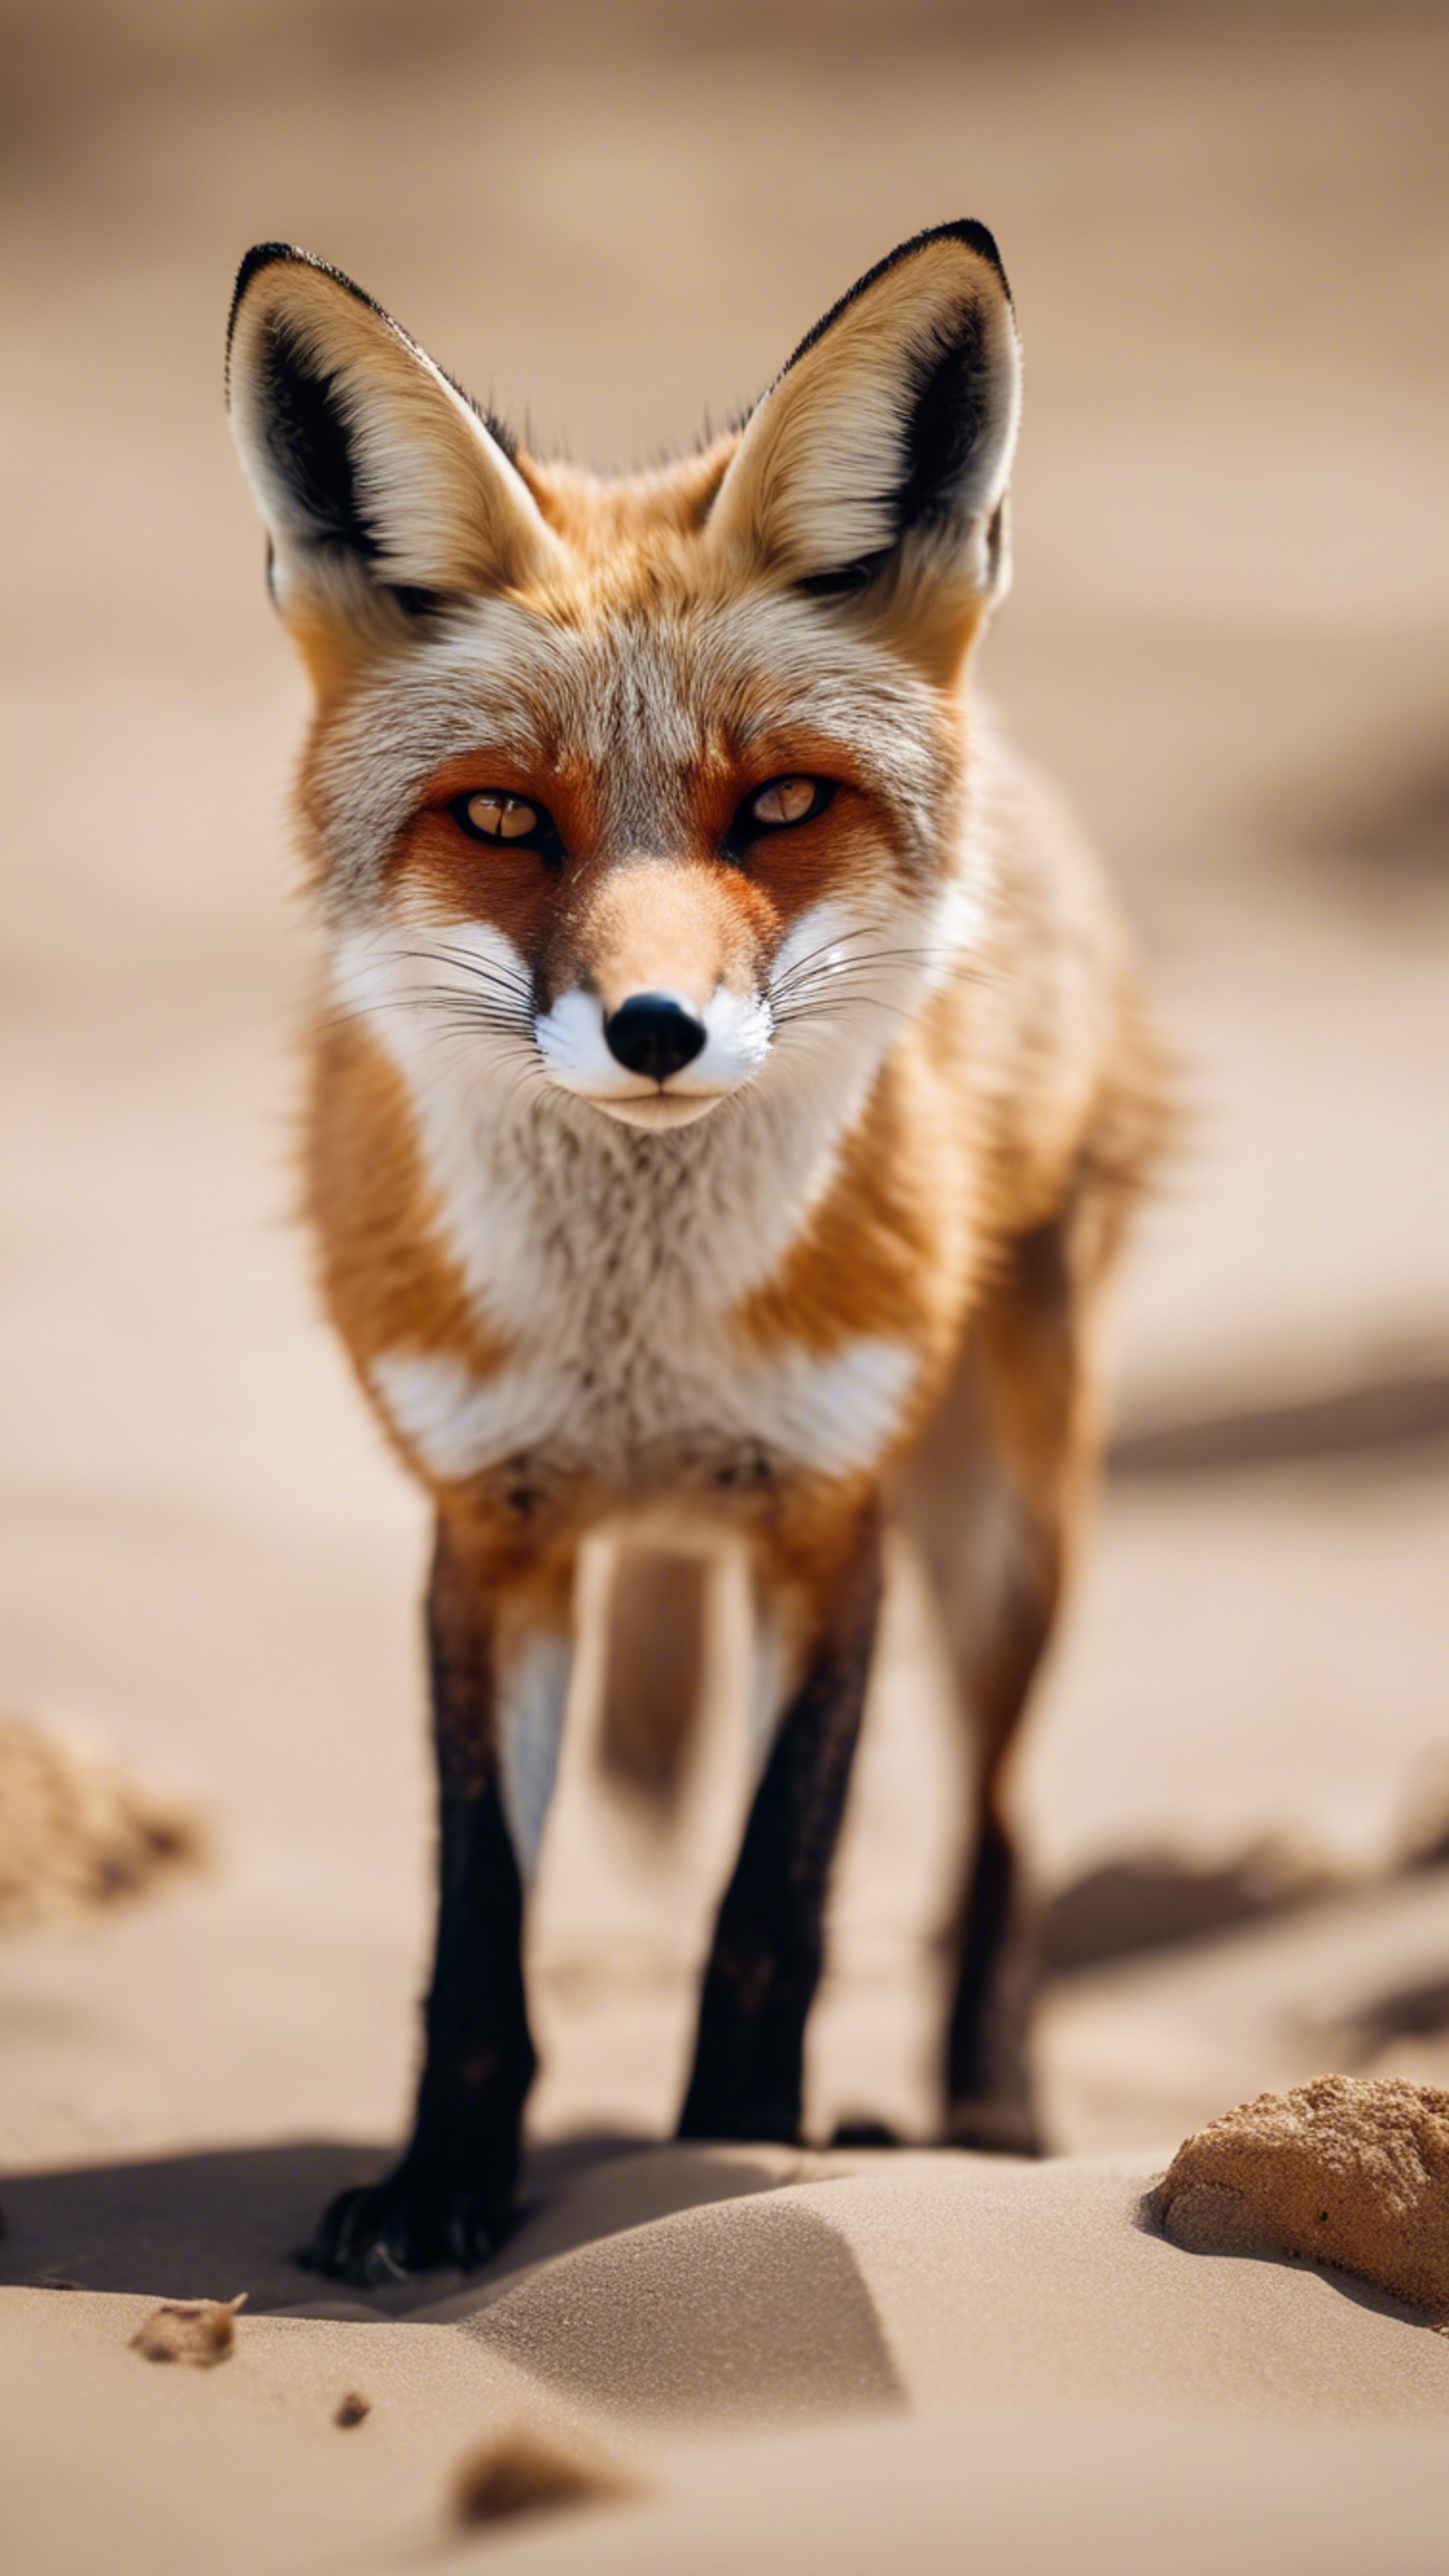 A lone desert fox in its natural habitat, roaming around amid the sand dunes. Tapeta[17bb71b2b2bc40f18dca]